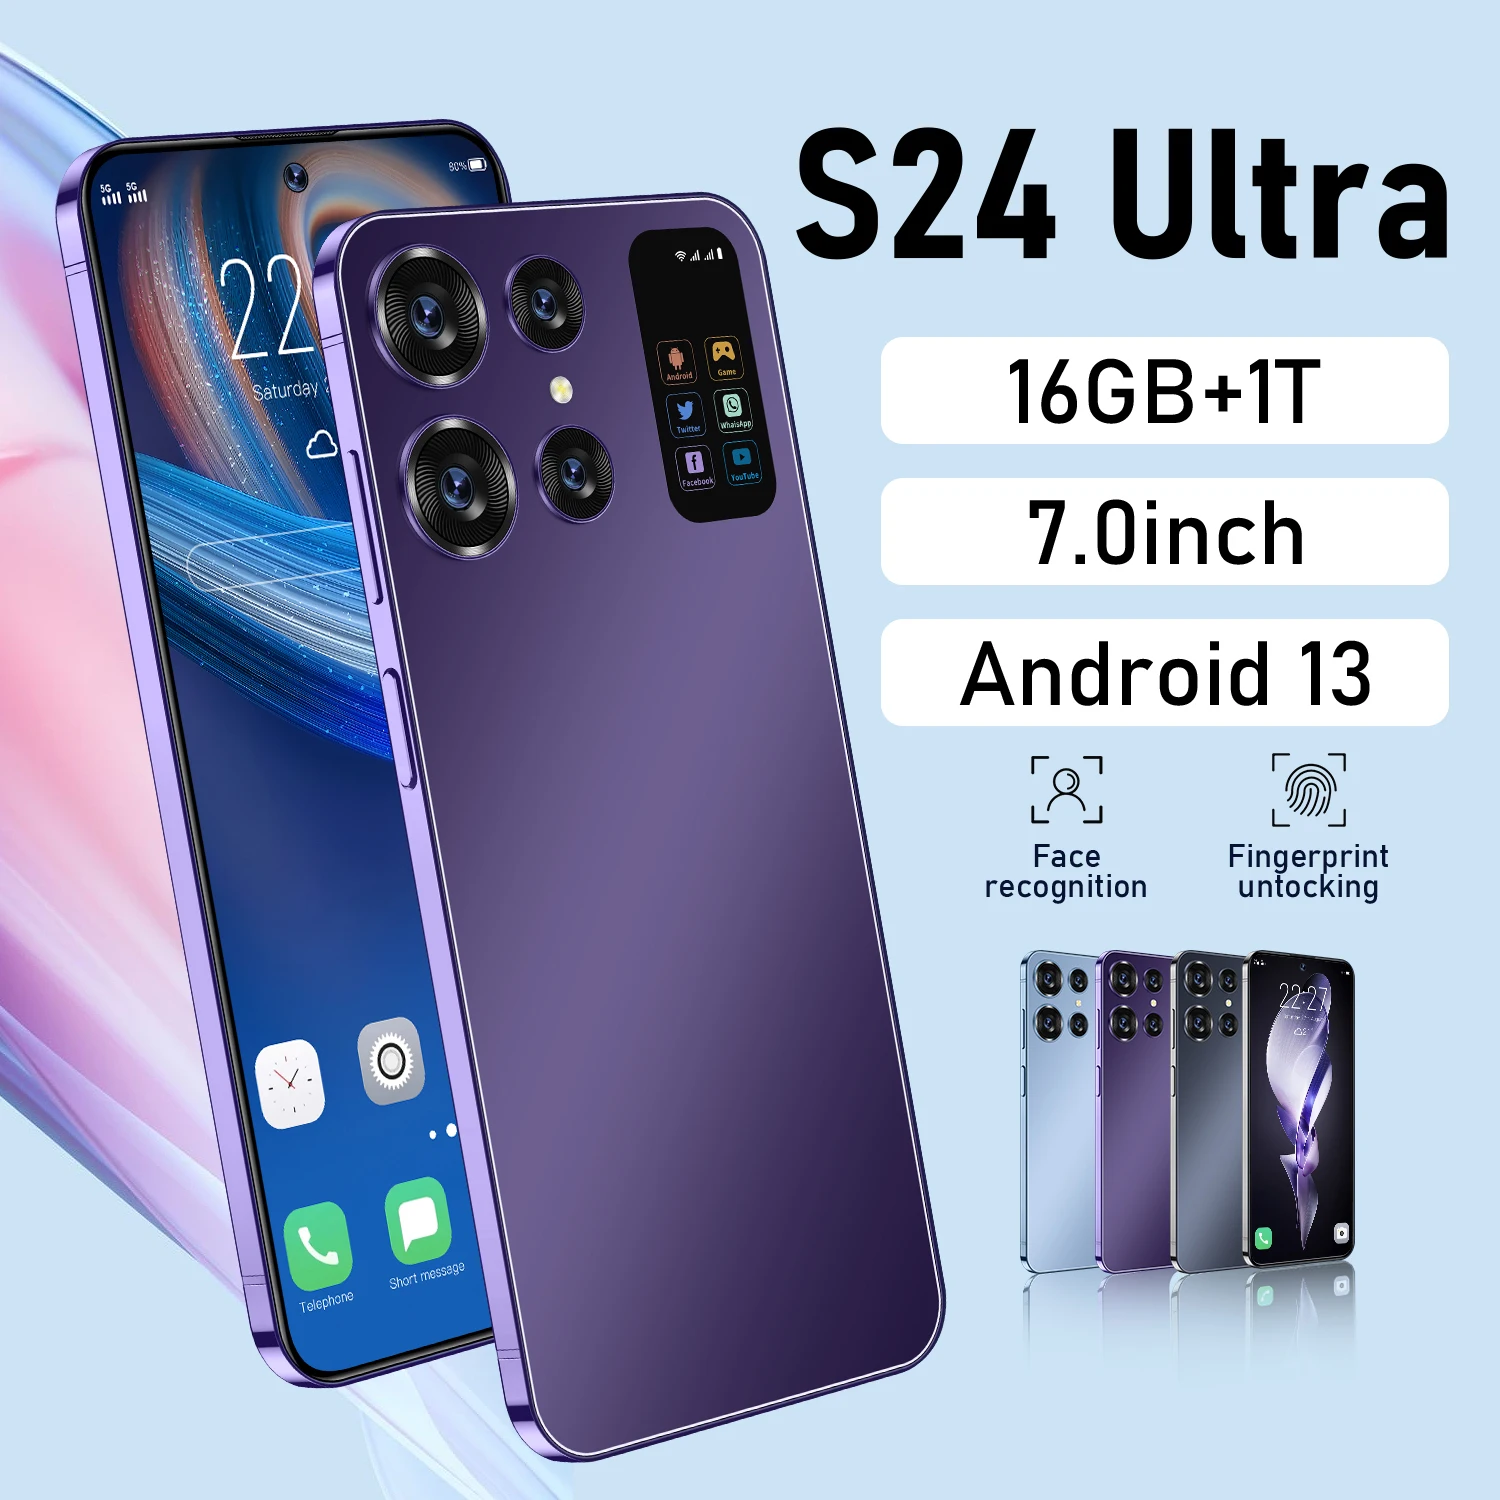 

Оригинальный смартфон S24 Ultra, экран 7,0 дюйма HD, 16 ГБ + 1 ТБ, телефон с двумя Sim-картами, Android 13, разблокировка распознаванием лица, 7000 мАч, 72 МП